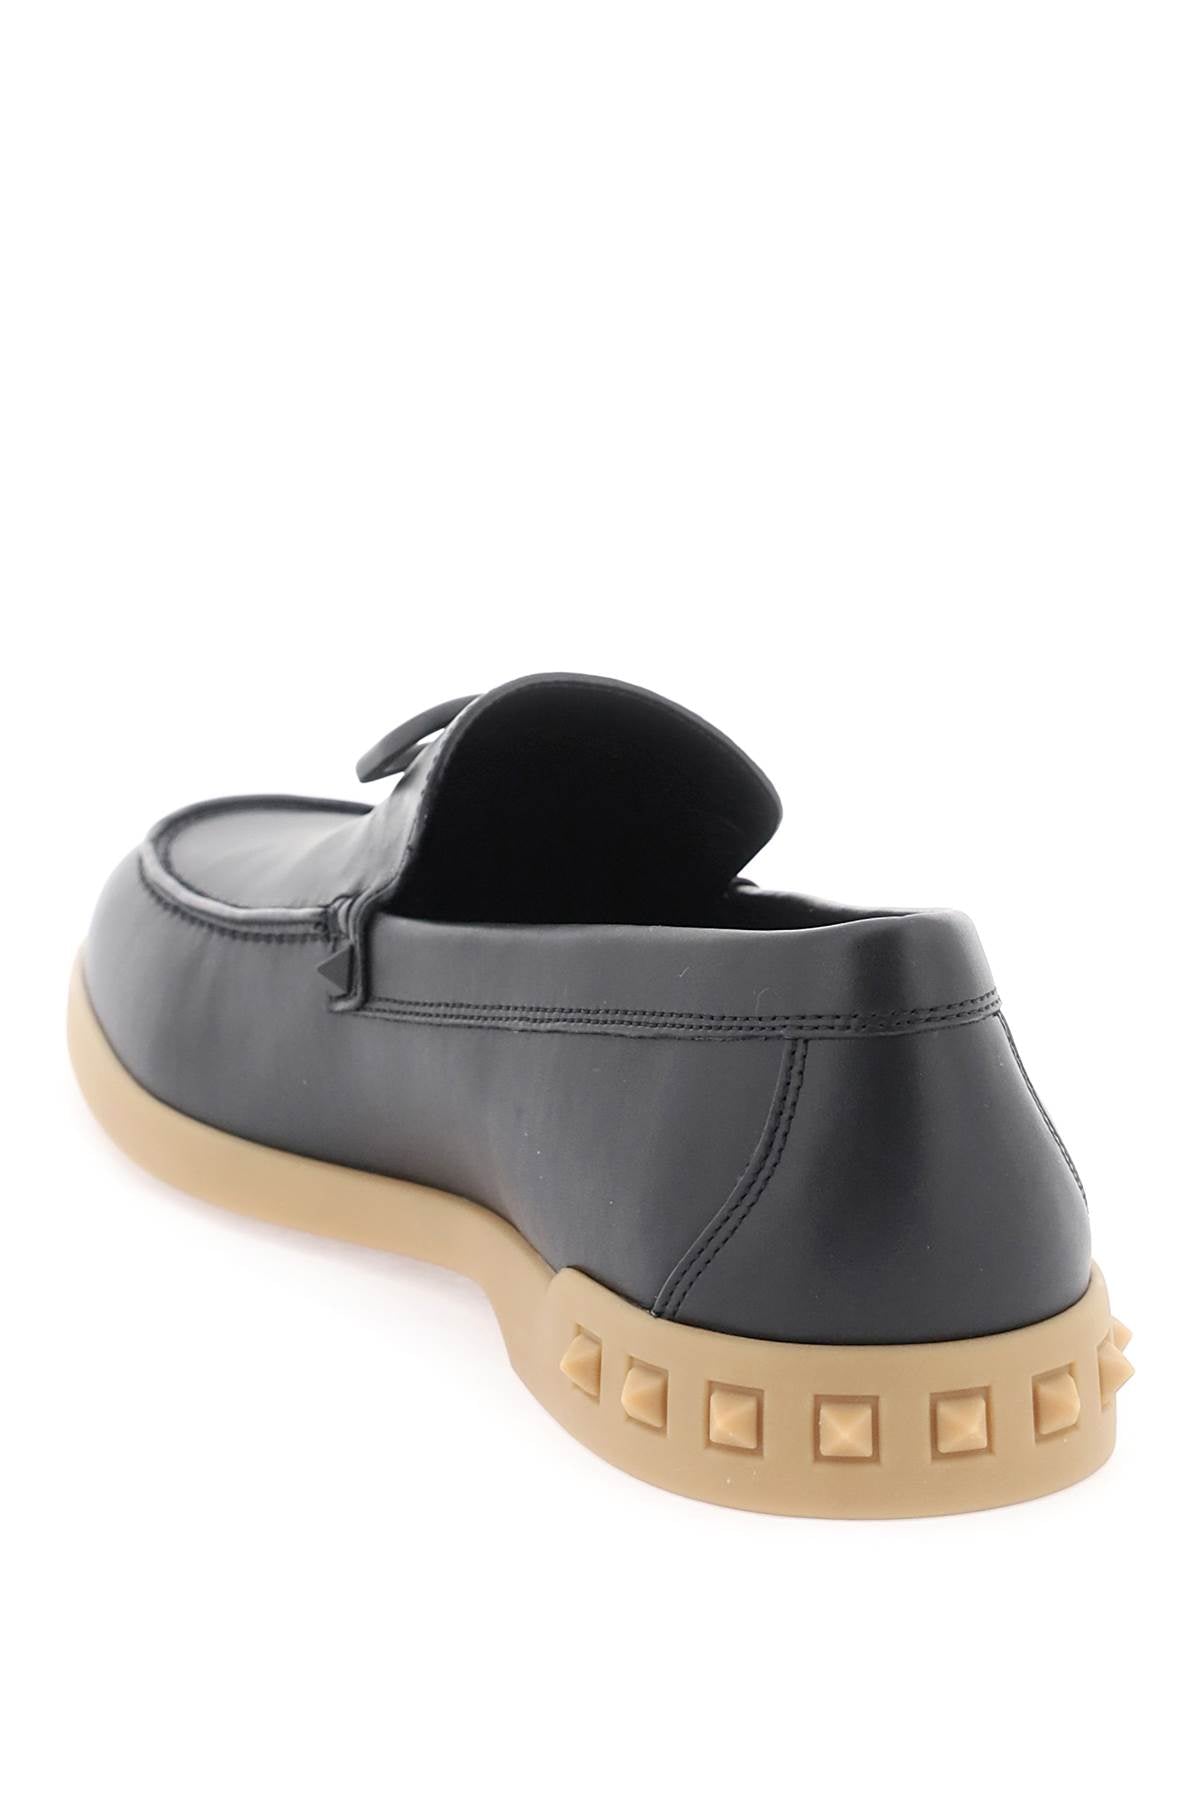 Valentino Garavani Leisure Flows Leather Loafers (Size - 40)